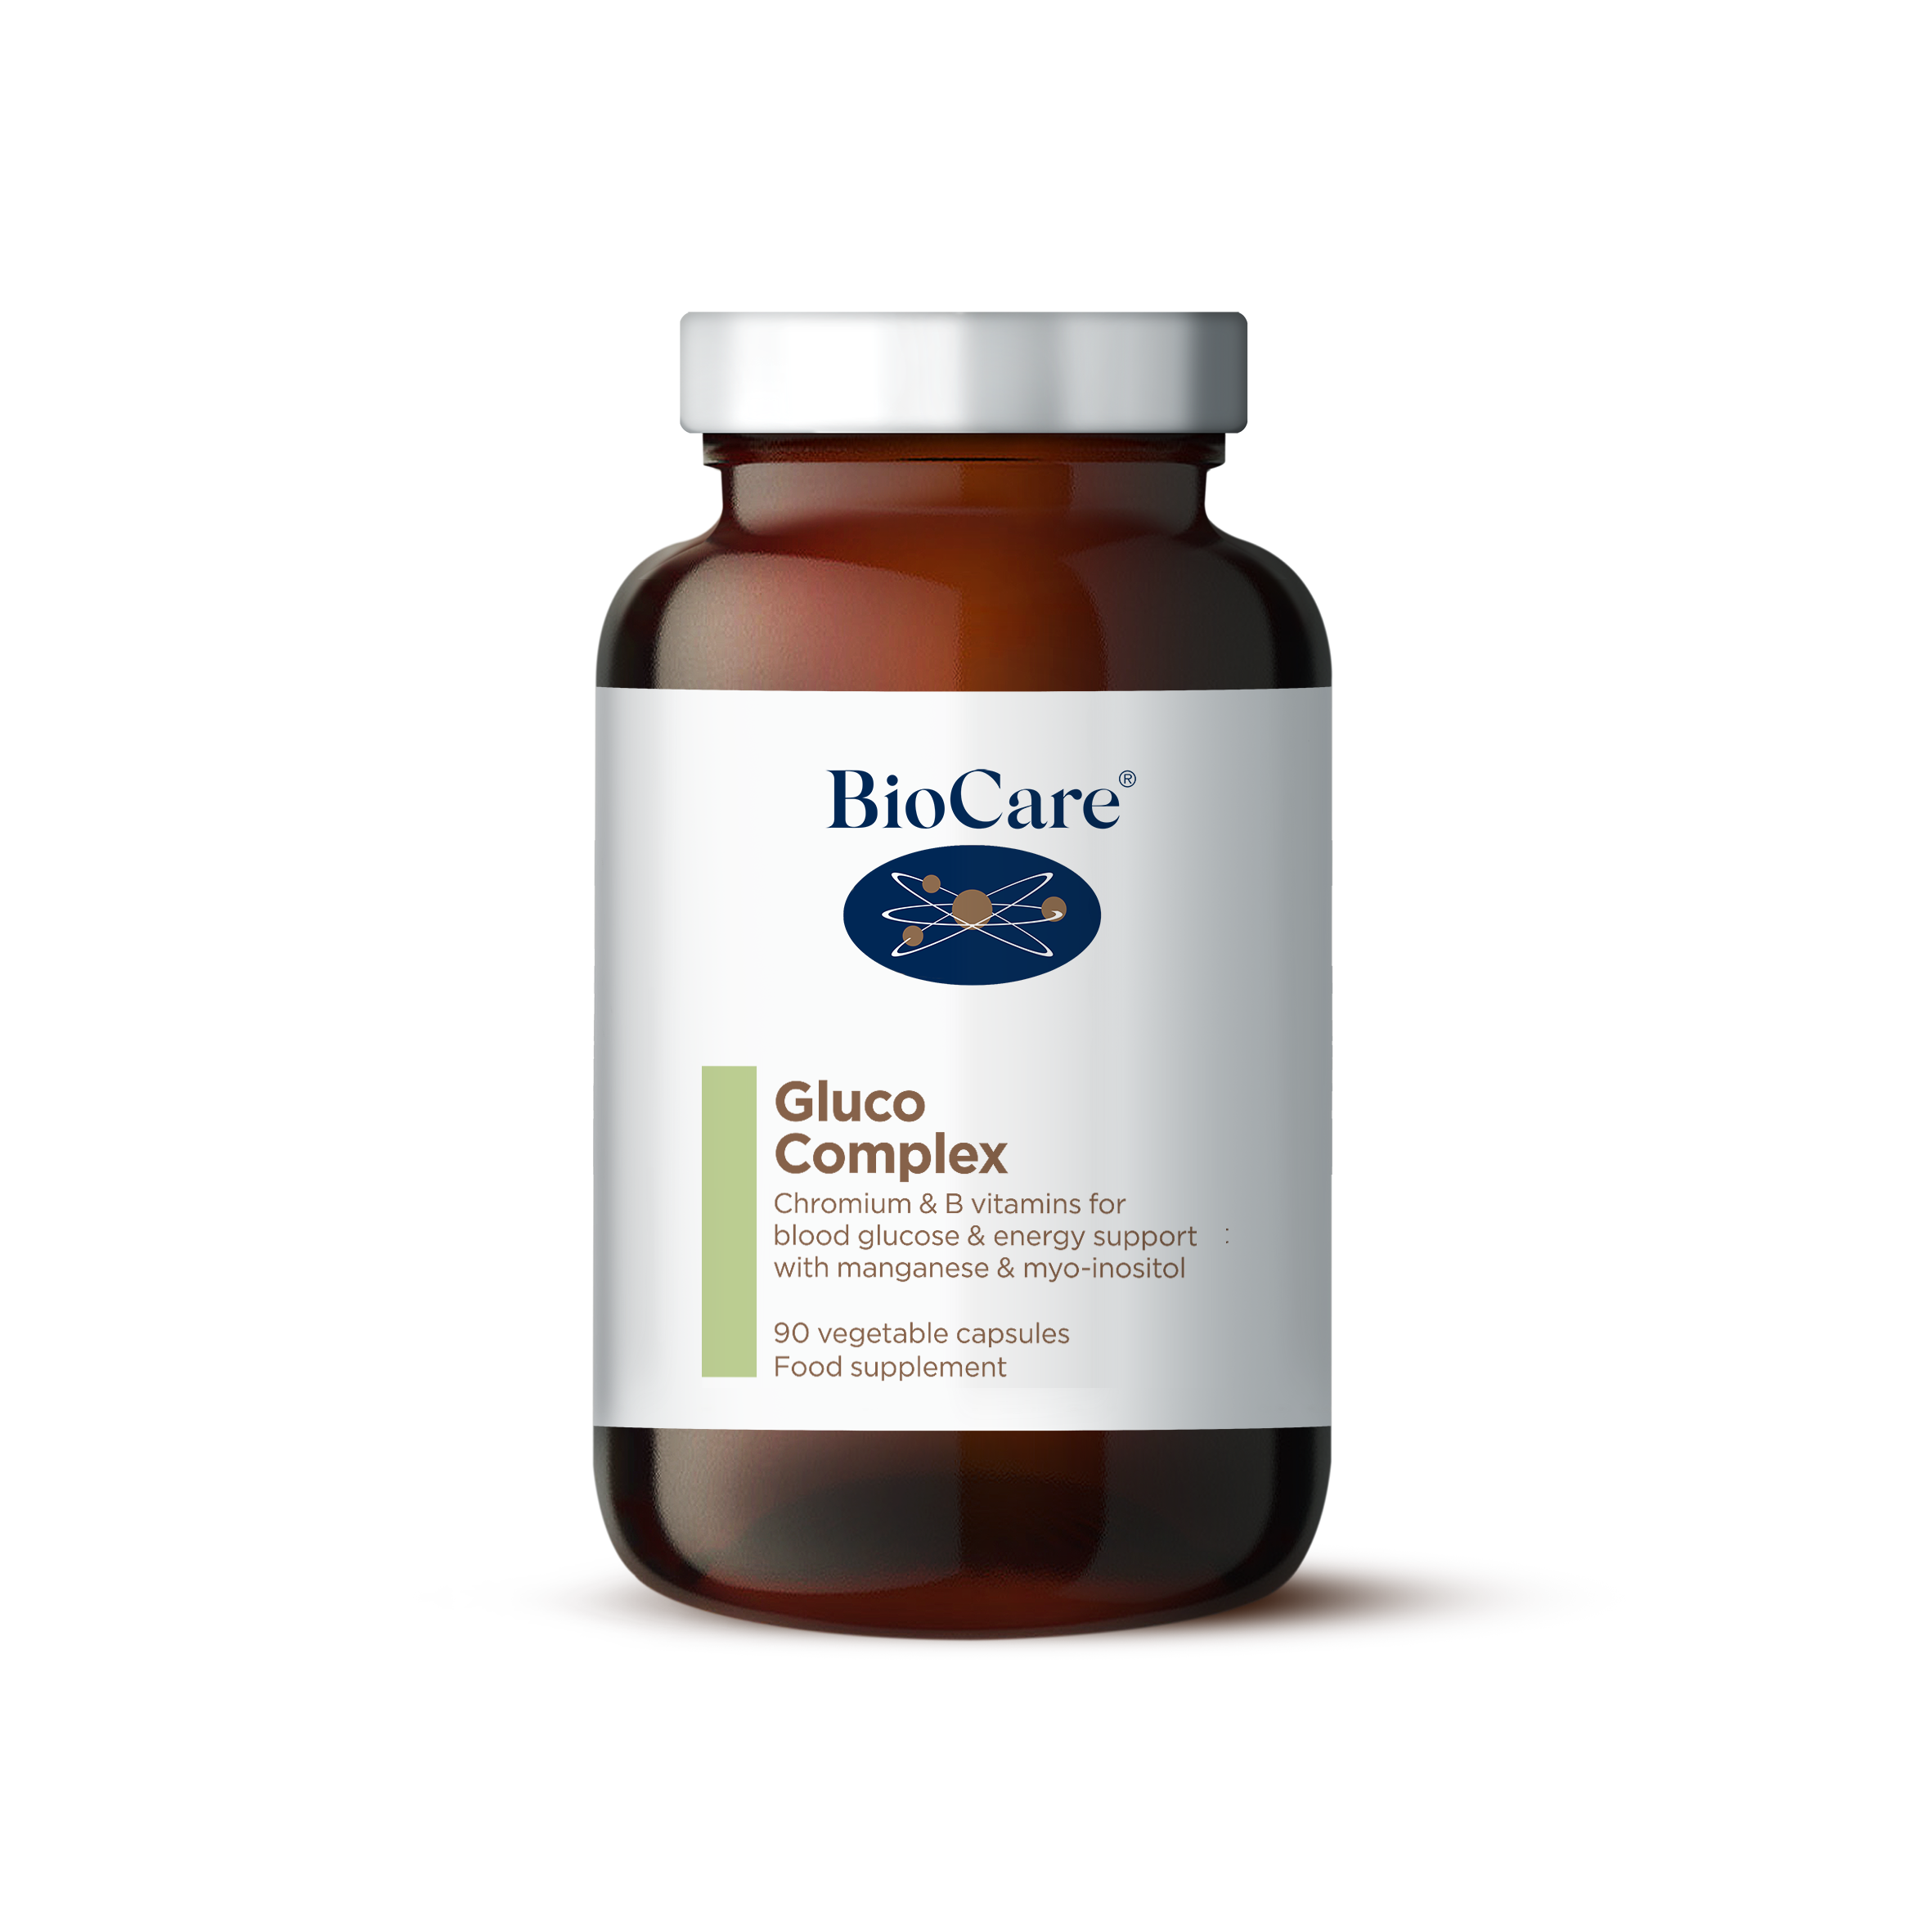 BioCare Gluco Complex with Chromium, B Vitamins, Manganese & myo-inositol 90 Capsules Vegan